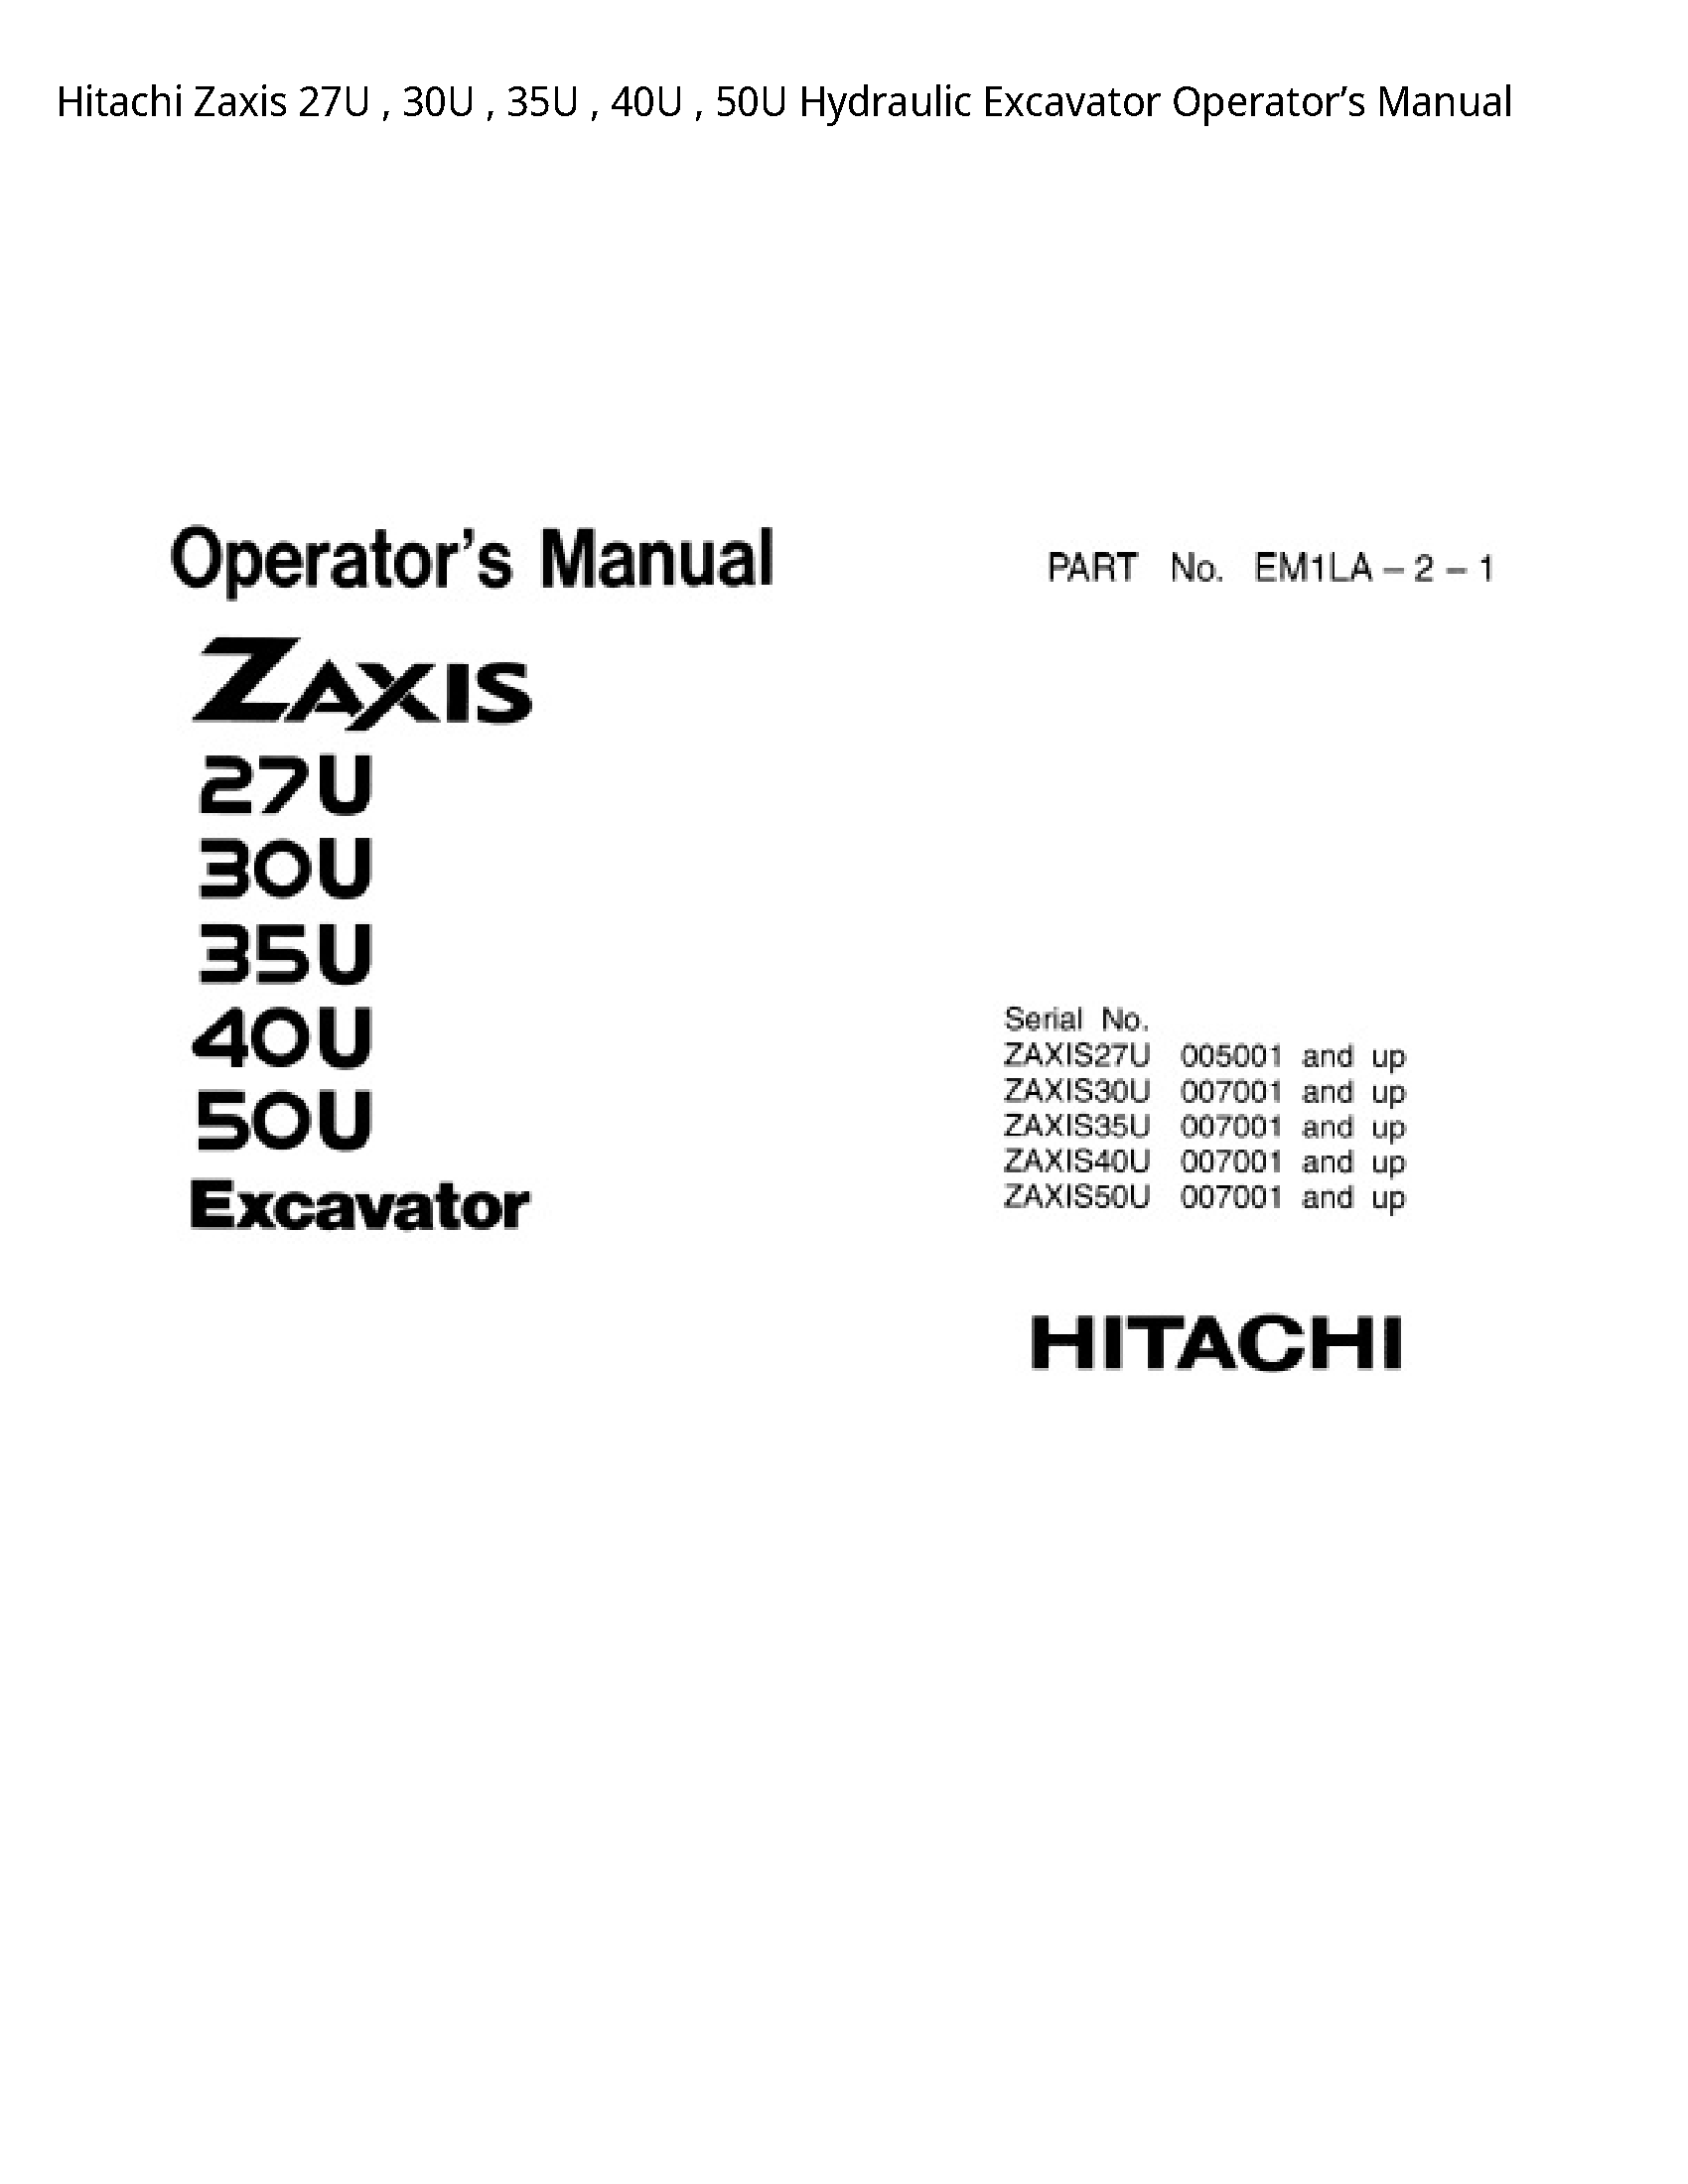 Hitachi 27U Zaxis Hydraulic Excavator Operator’s manual